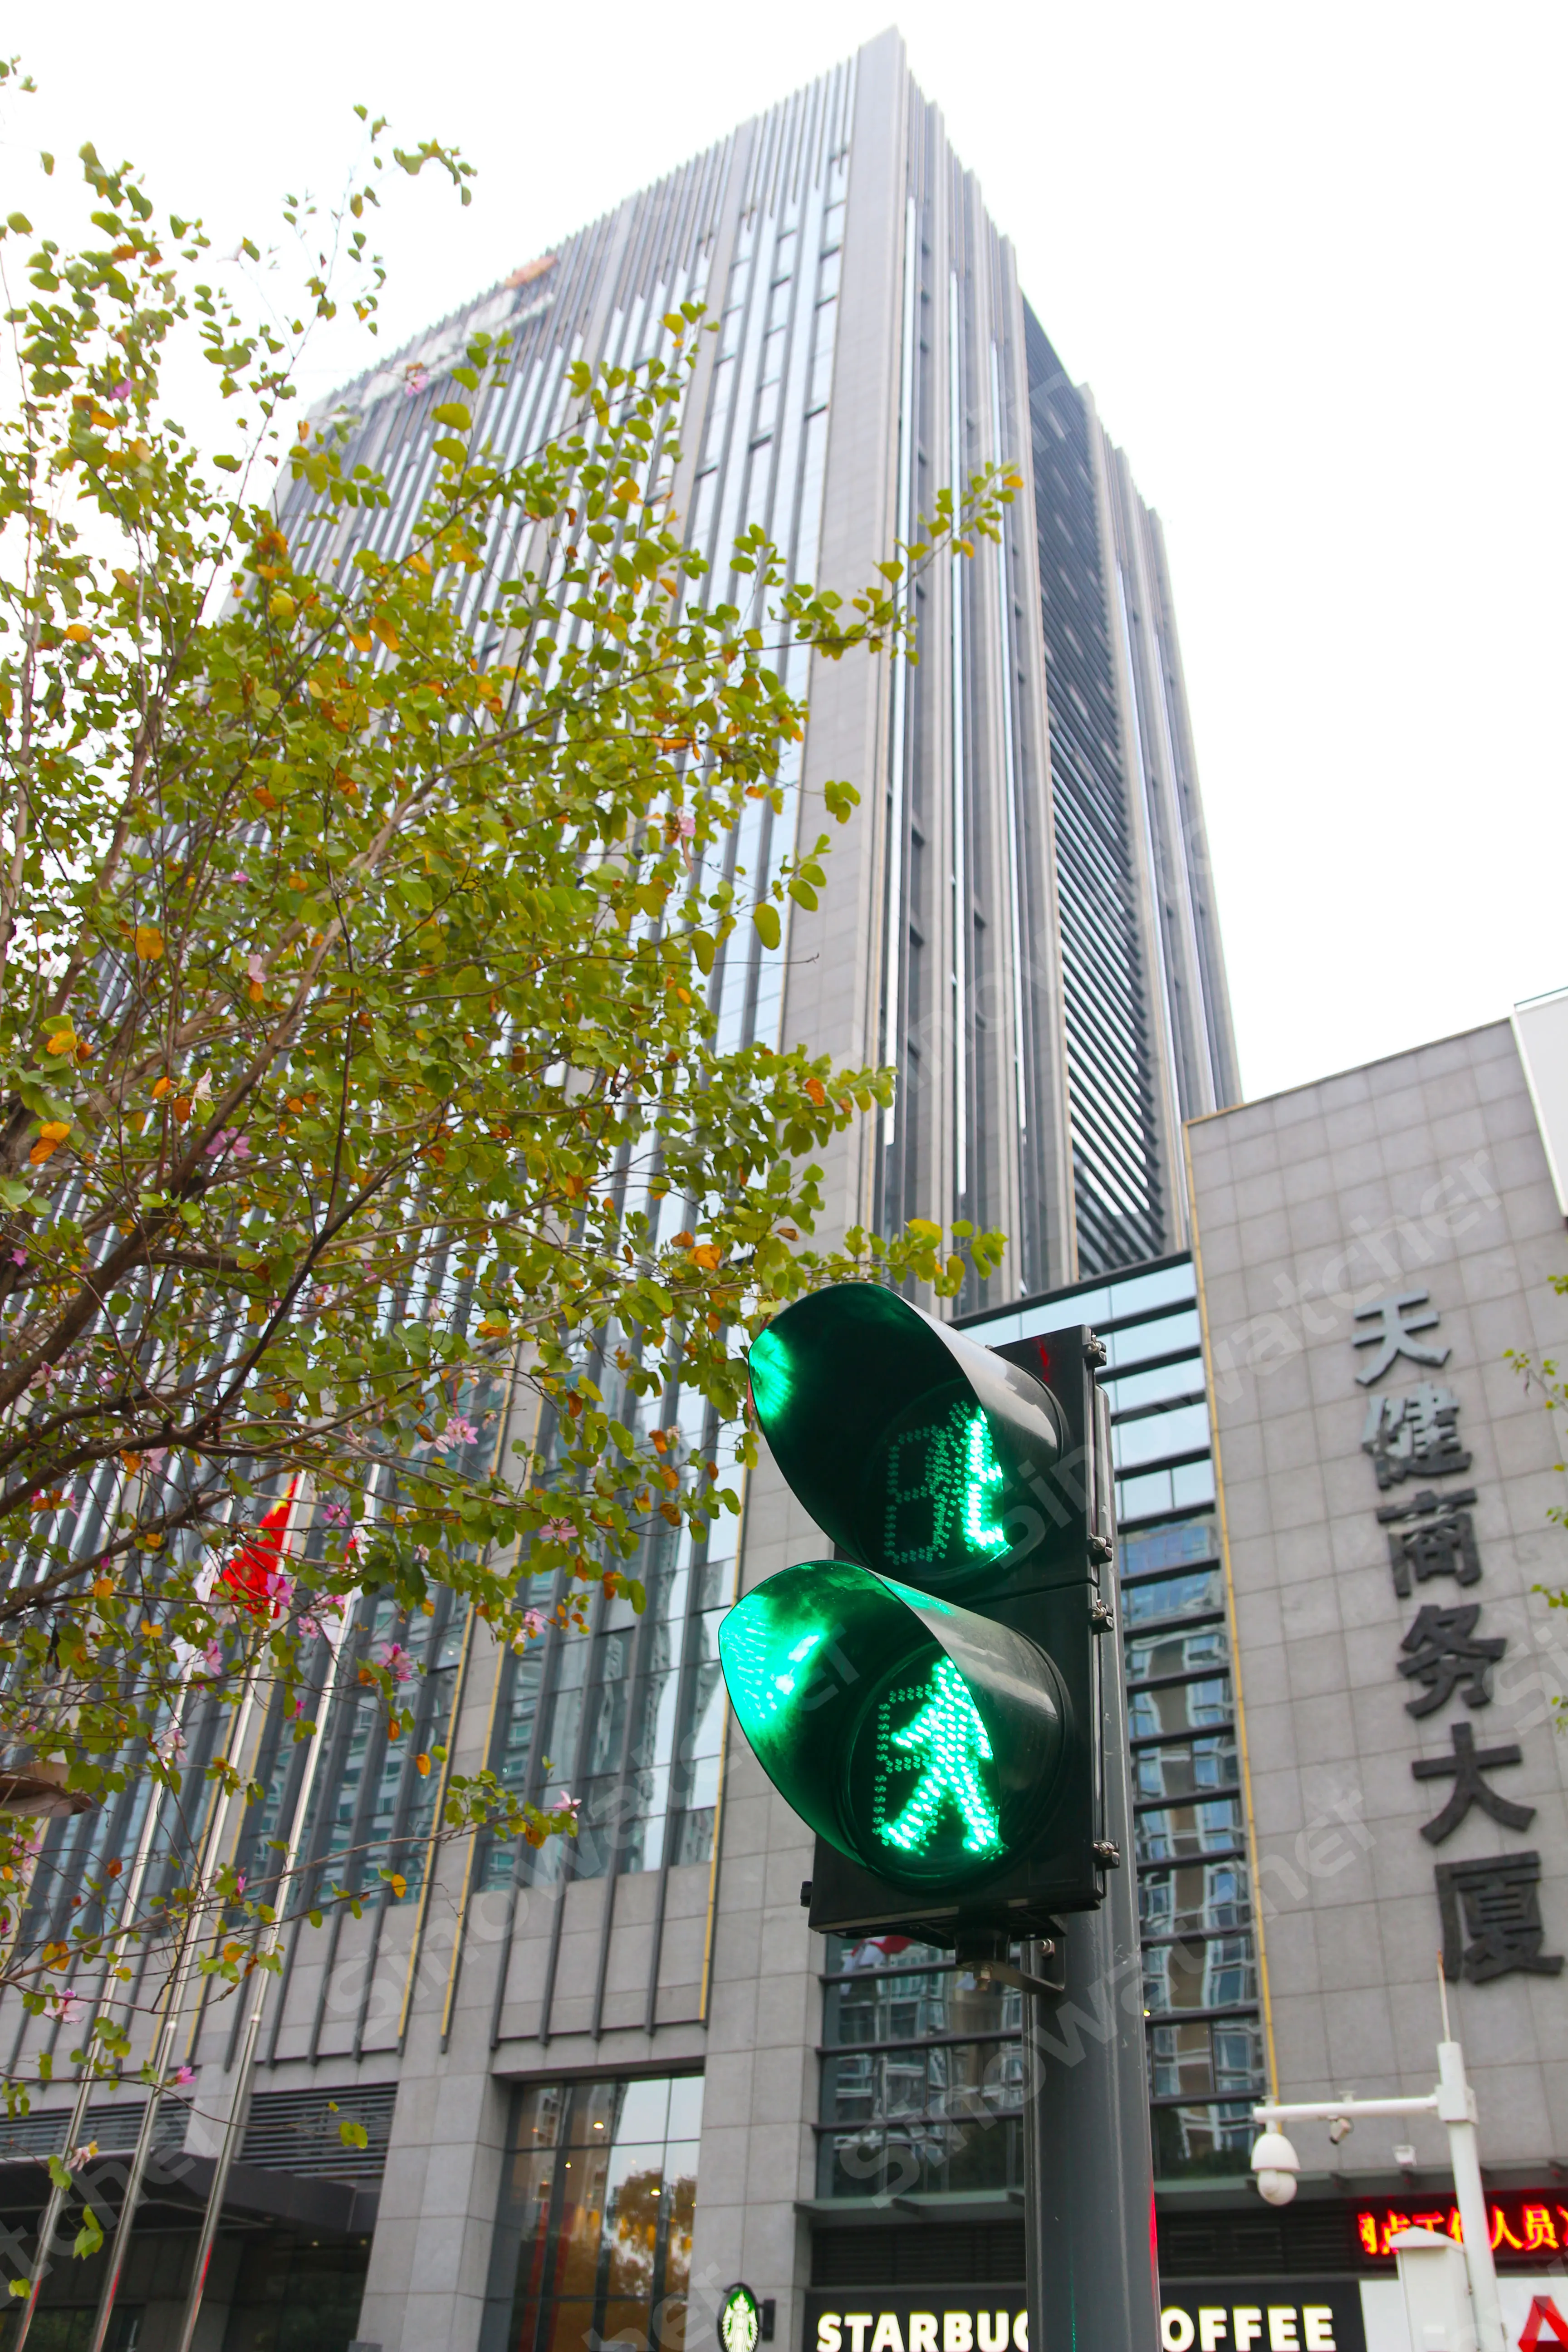 Semáforos en Shenzhen